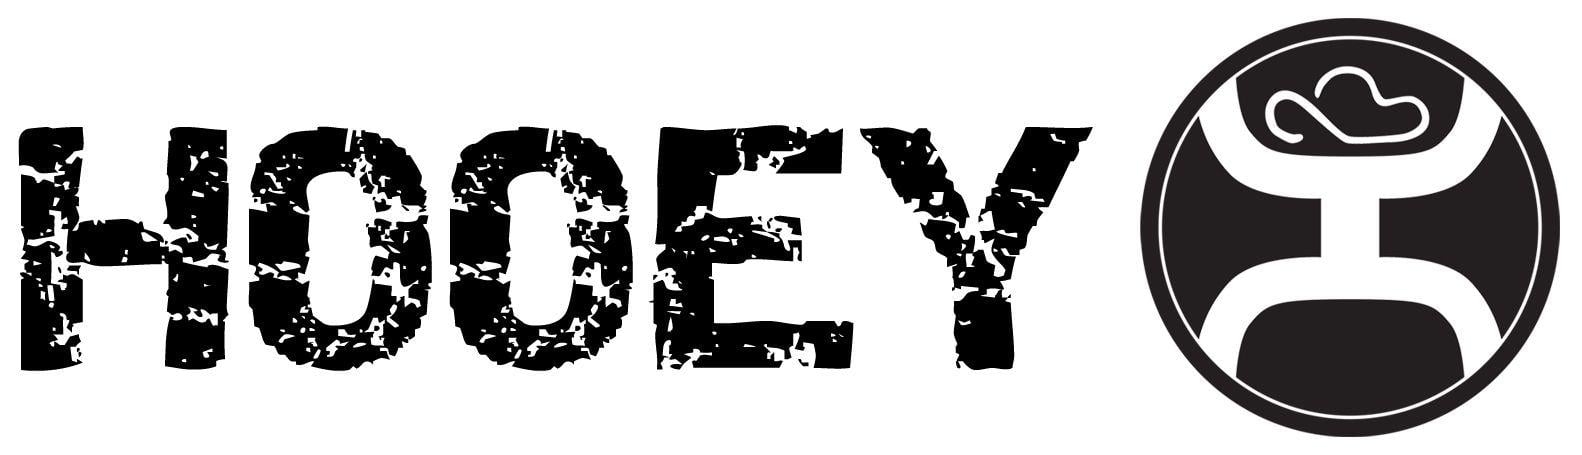 Getyourhooey Logo - Get Your Hooey Logo Related Keywords & Suggestions Your Hooey